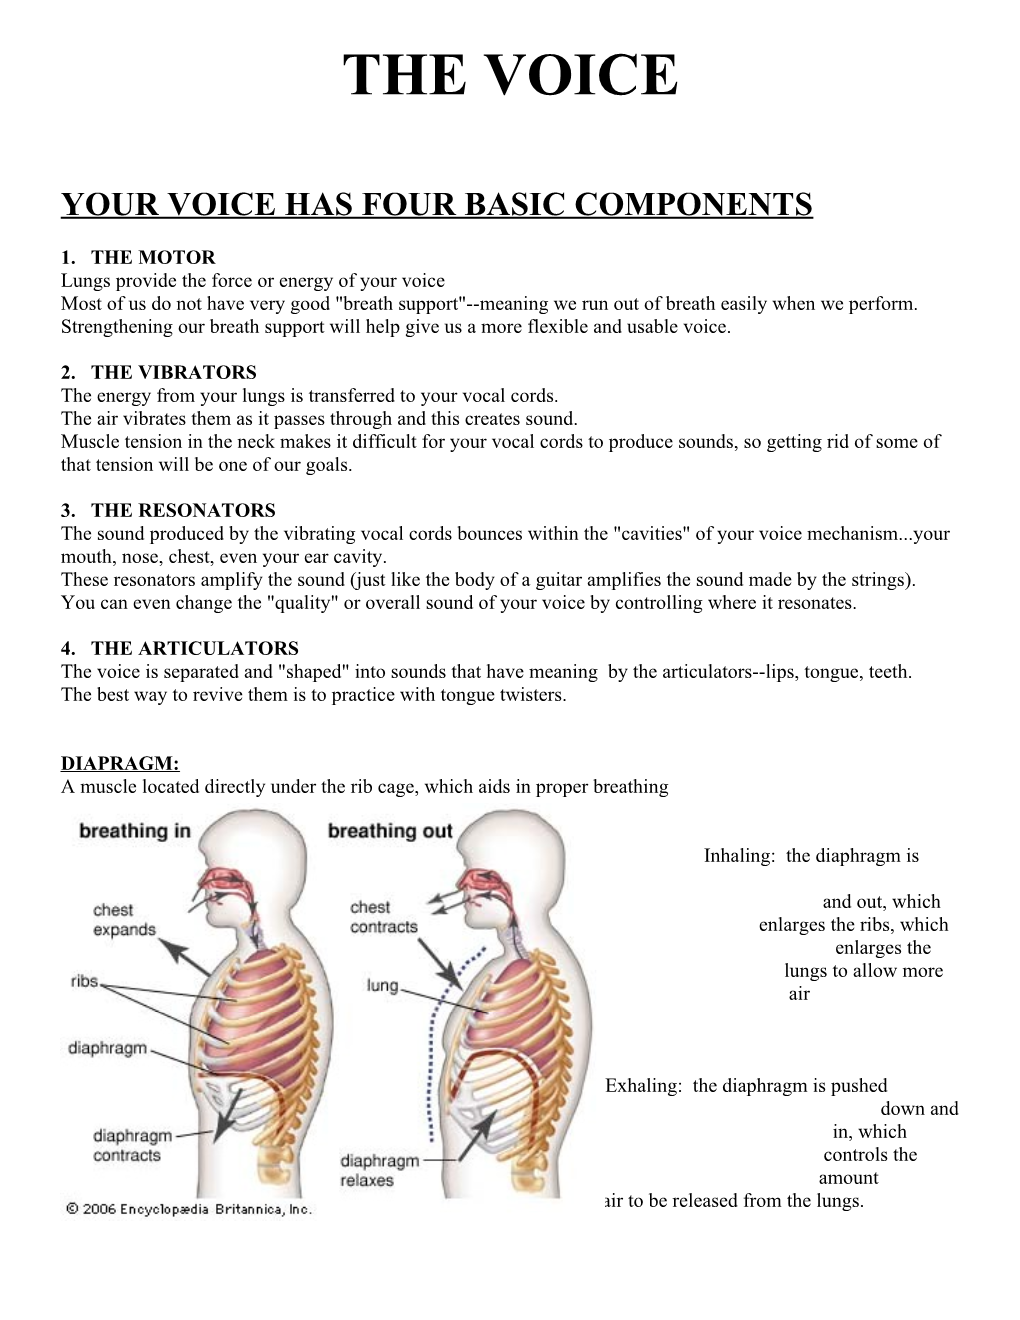 Your Voice Has Four Basic Components